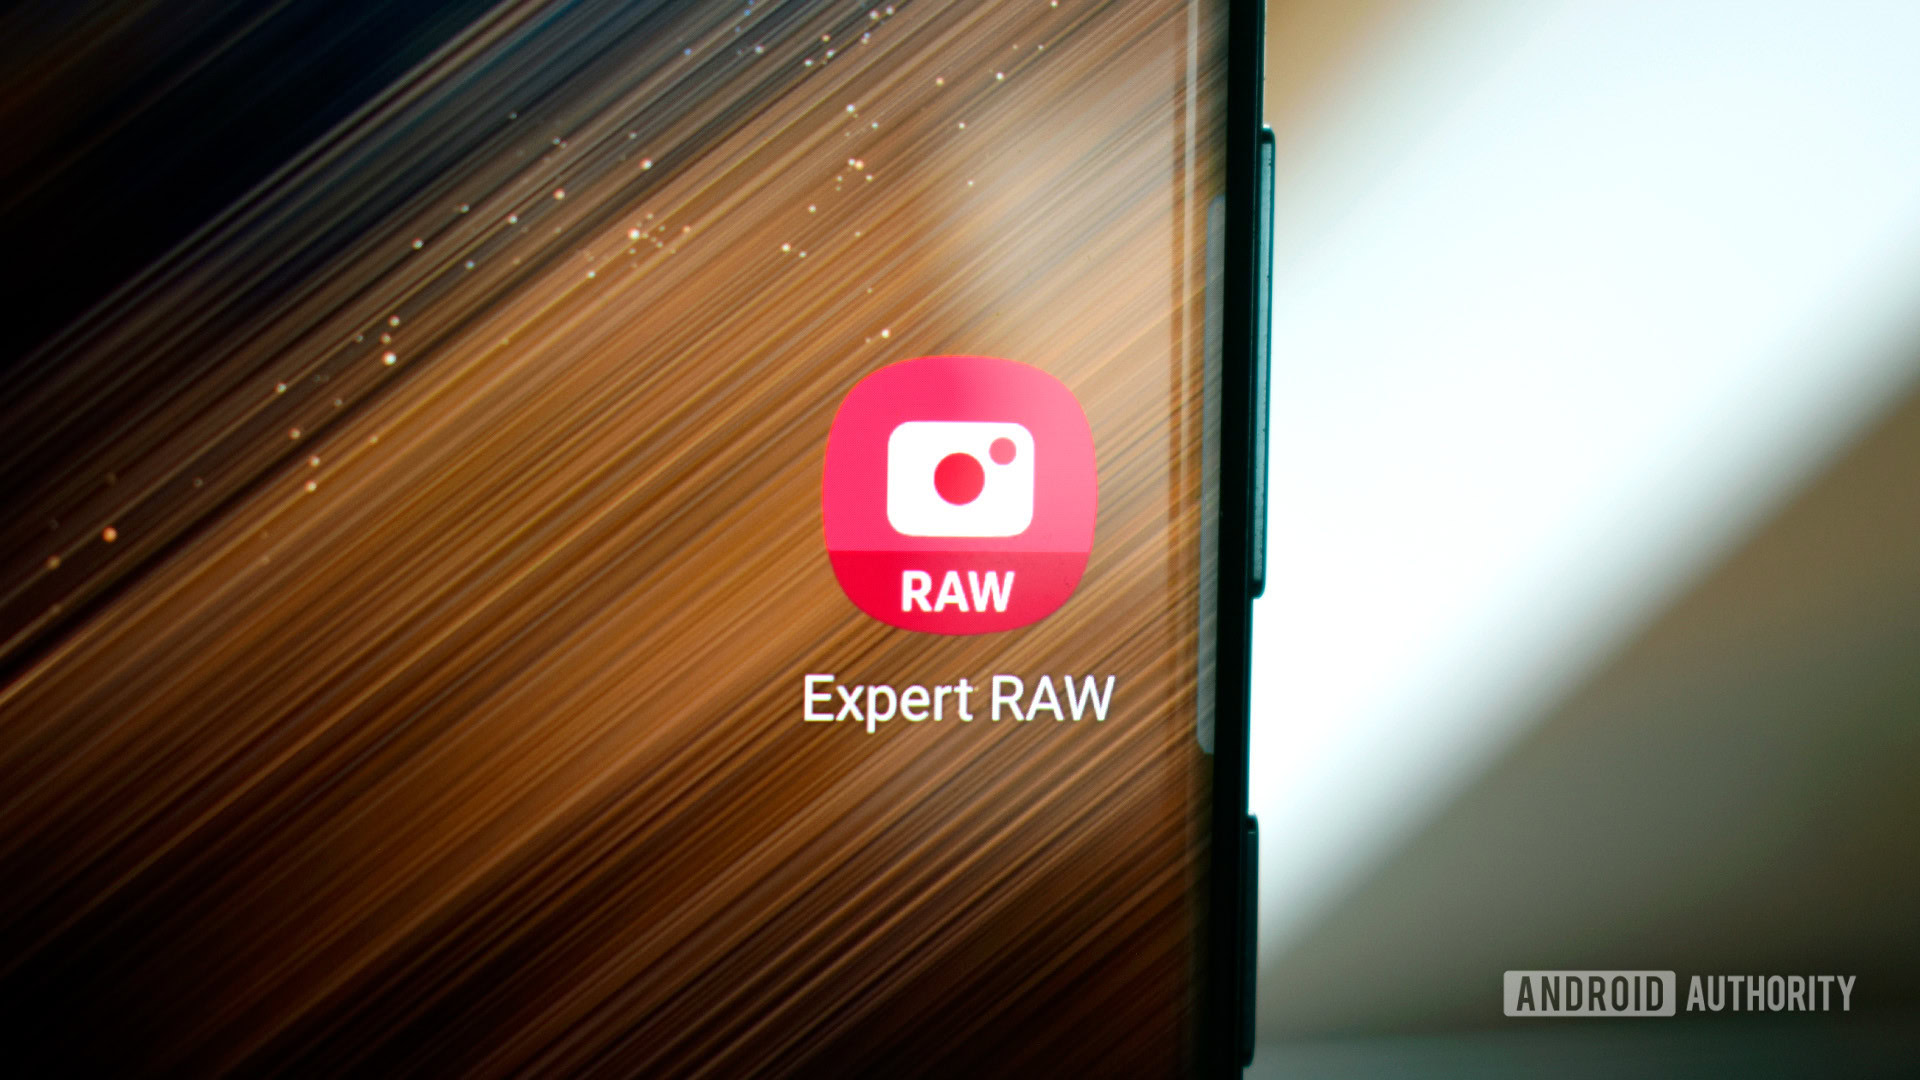 Samsung Expert RAW app icon